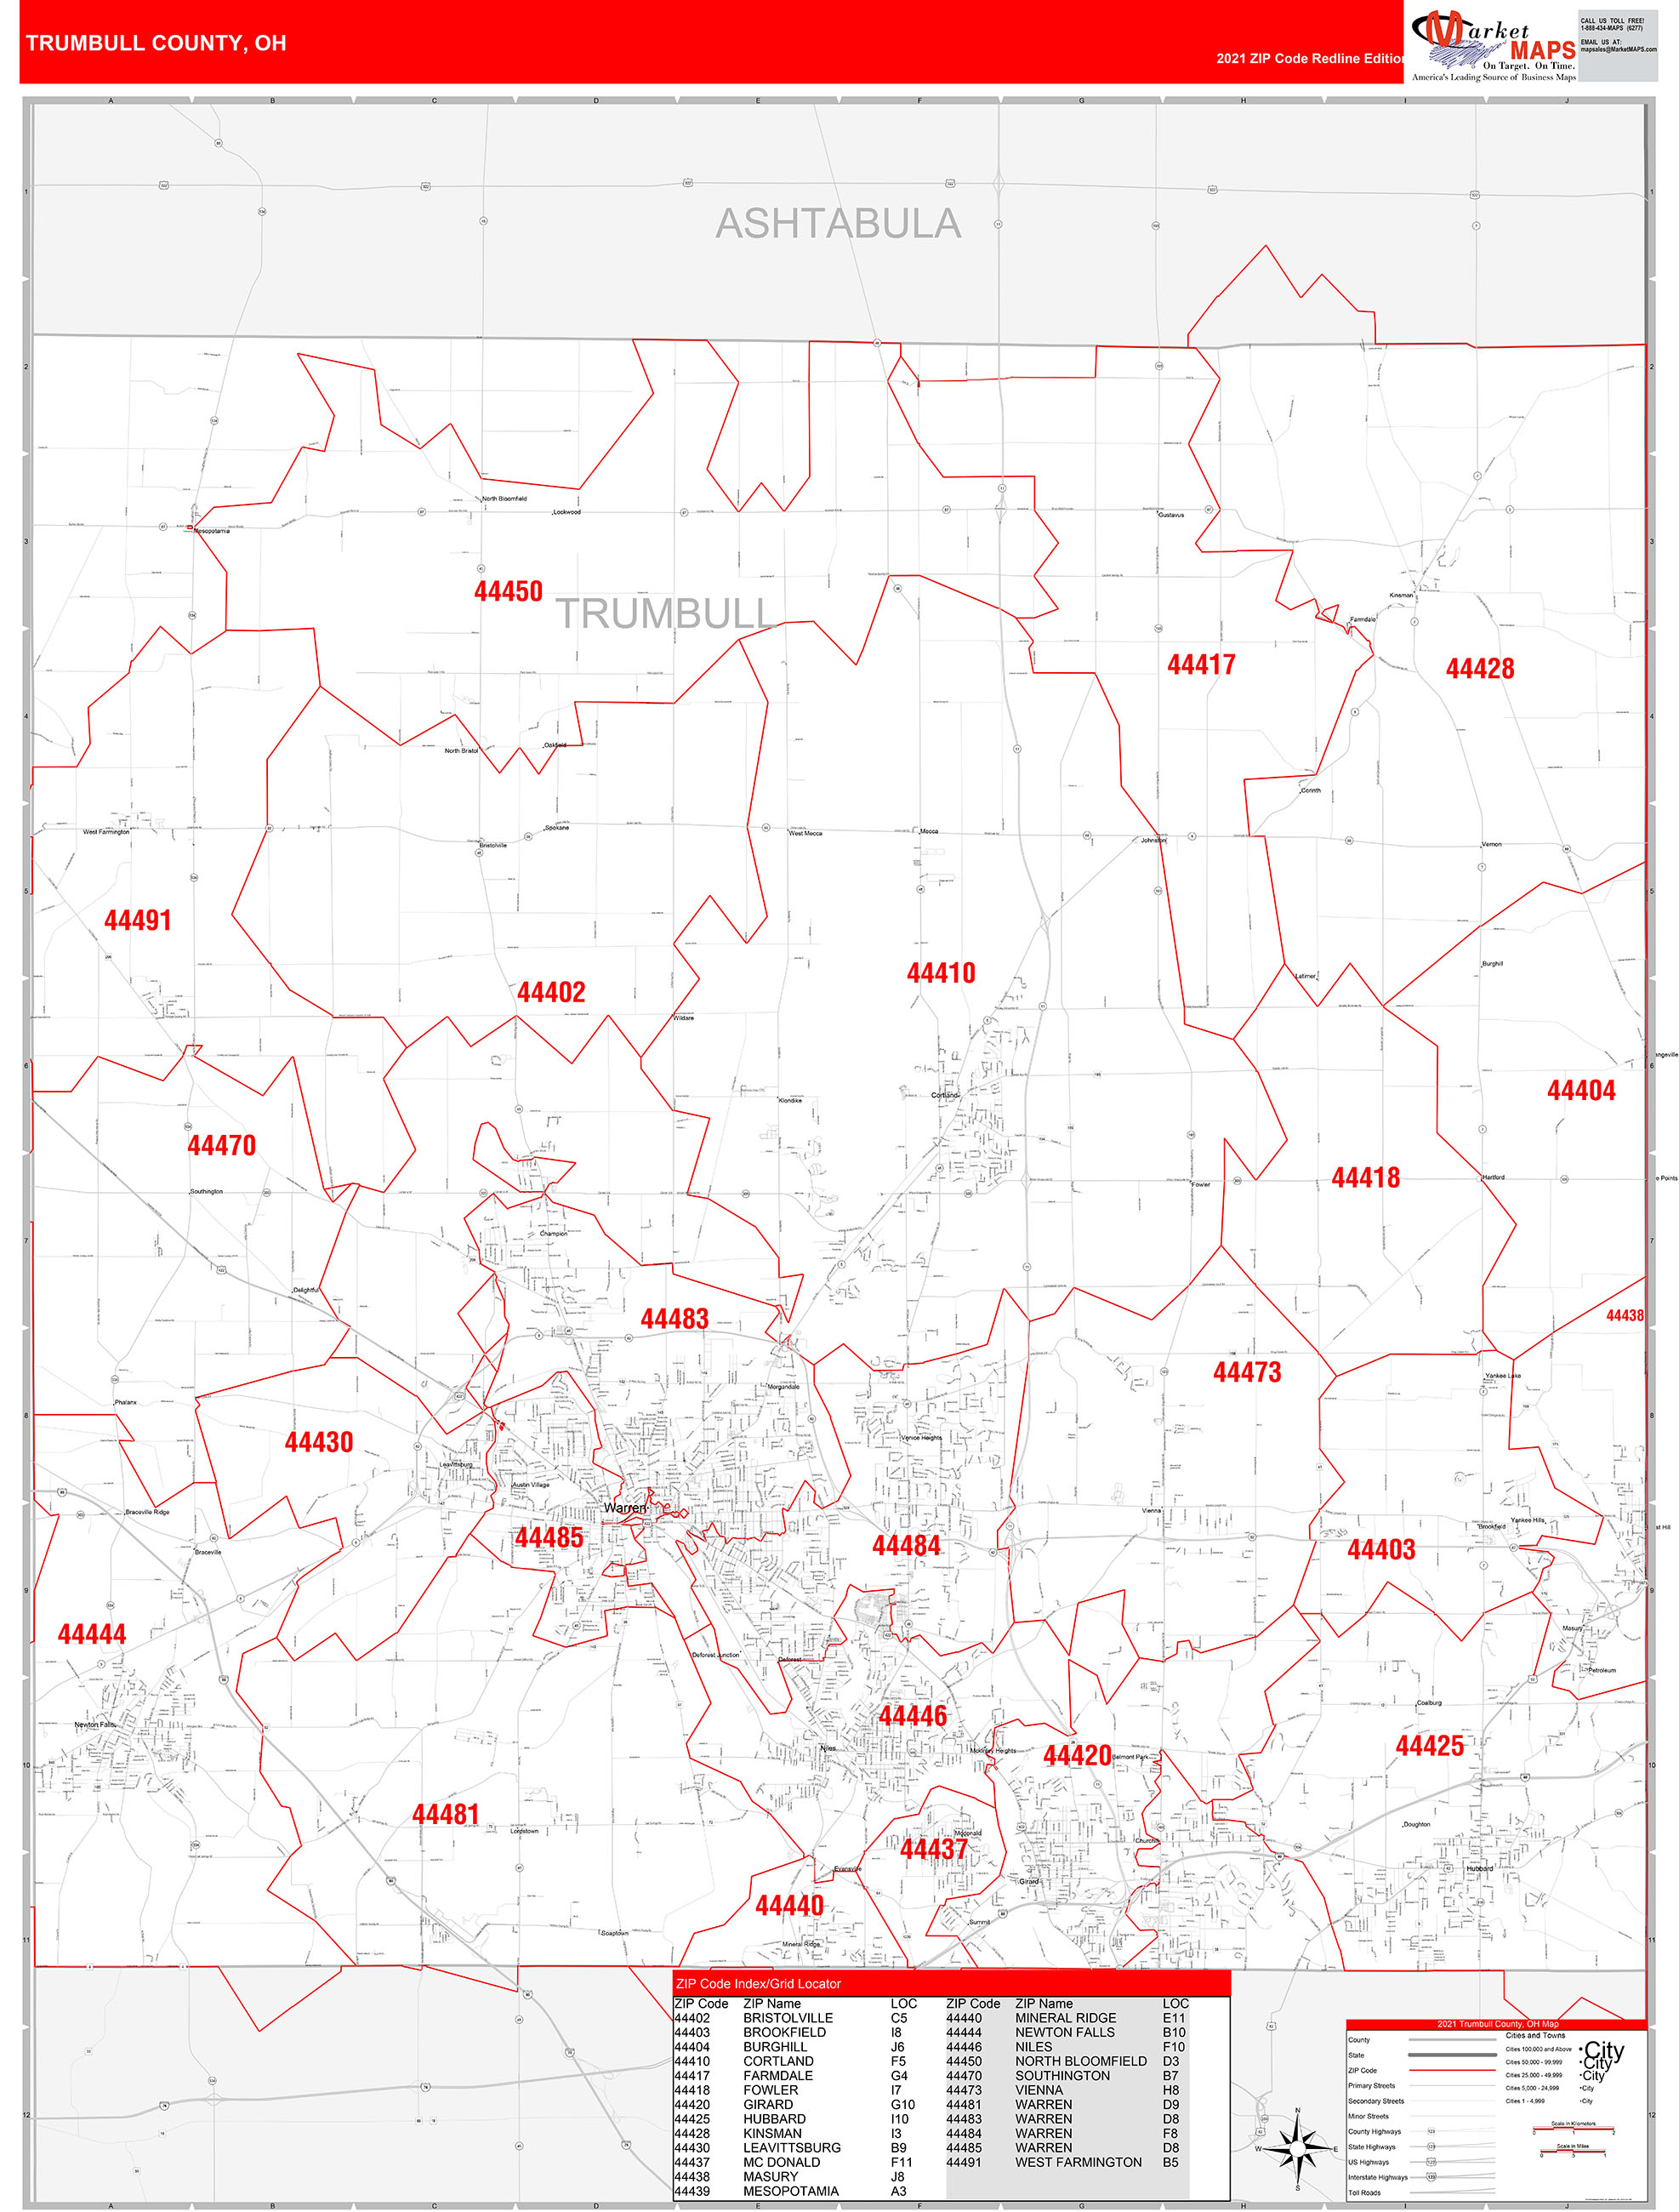 Ohio County Map By Zip Code 0806